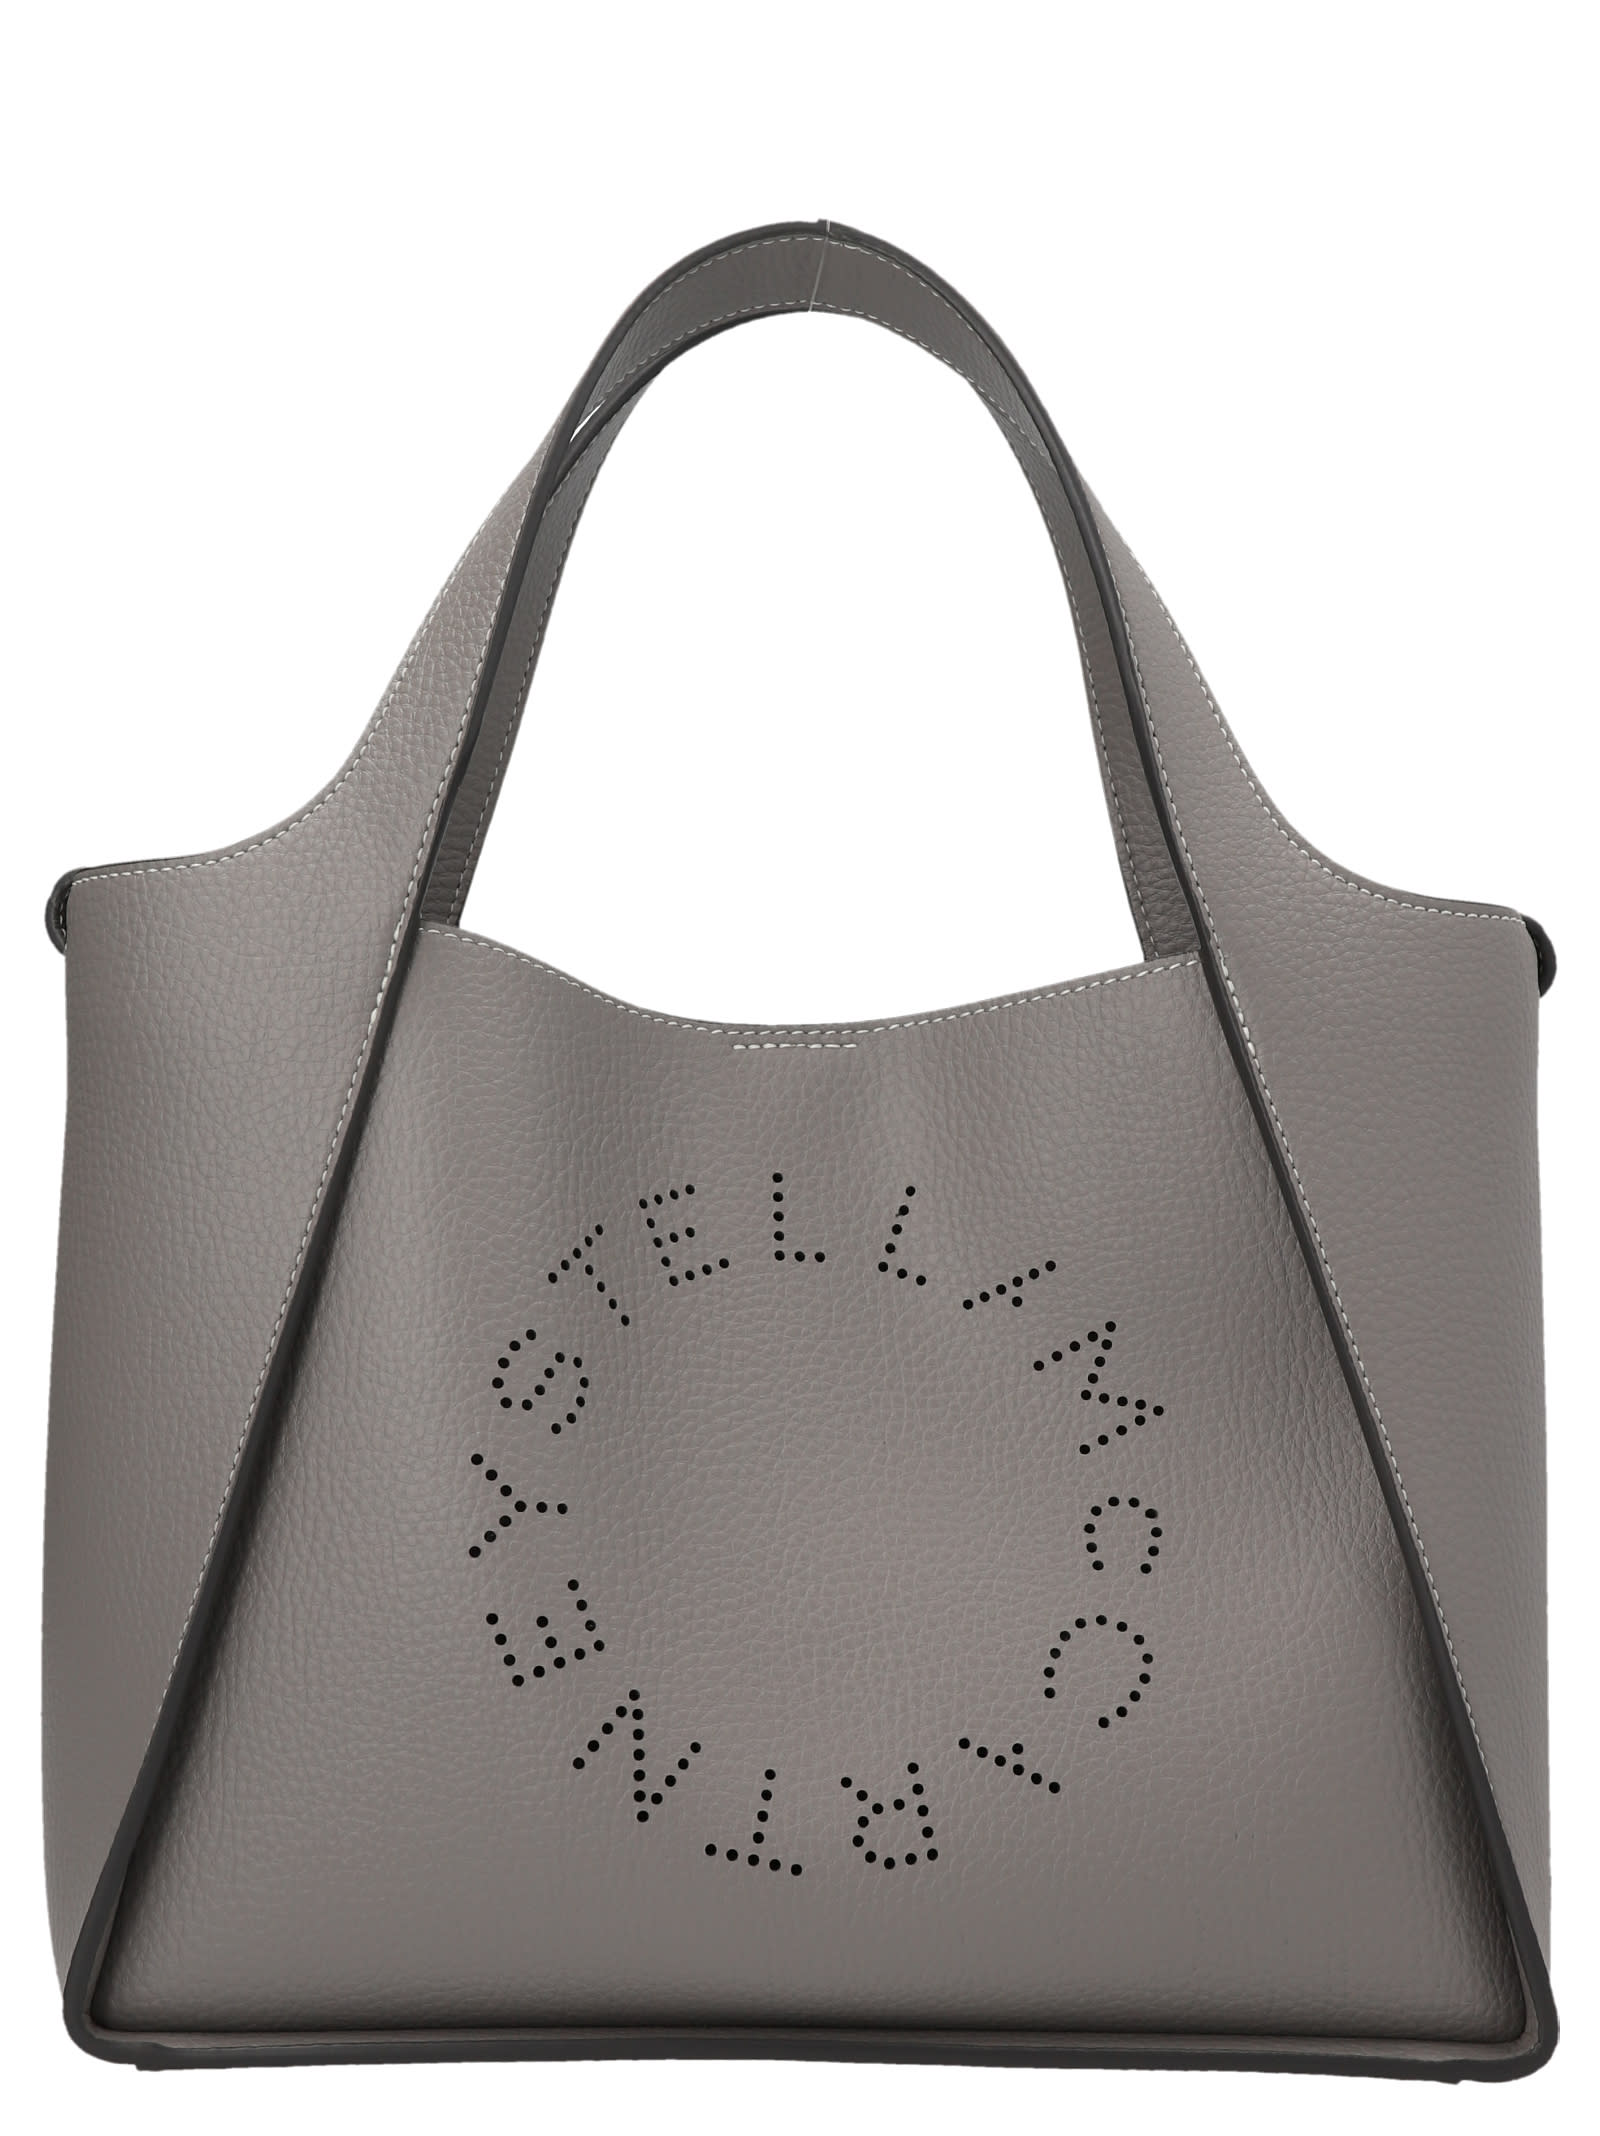 Stella McCartney grainy Mat Handbag